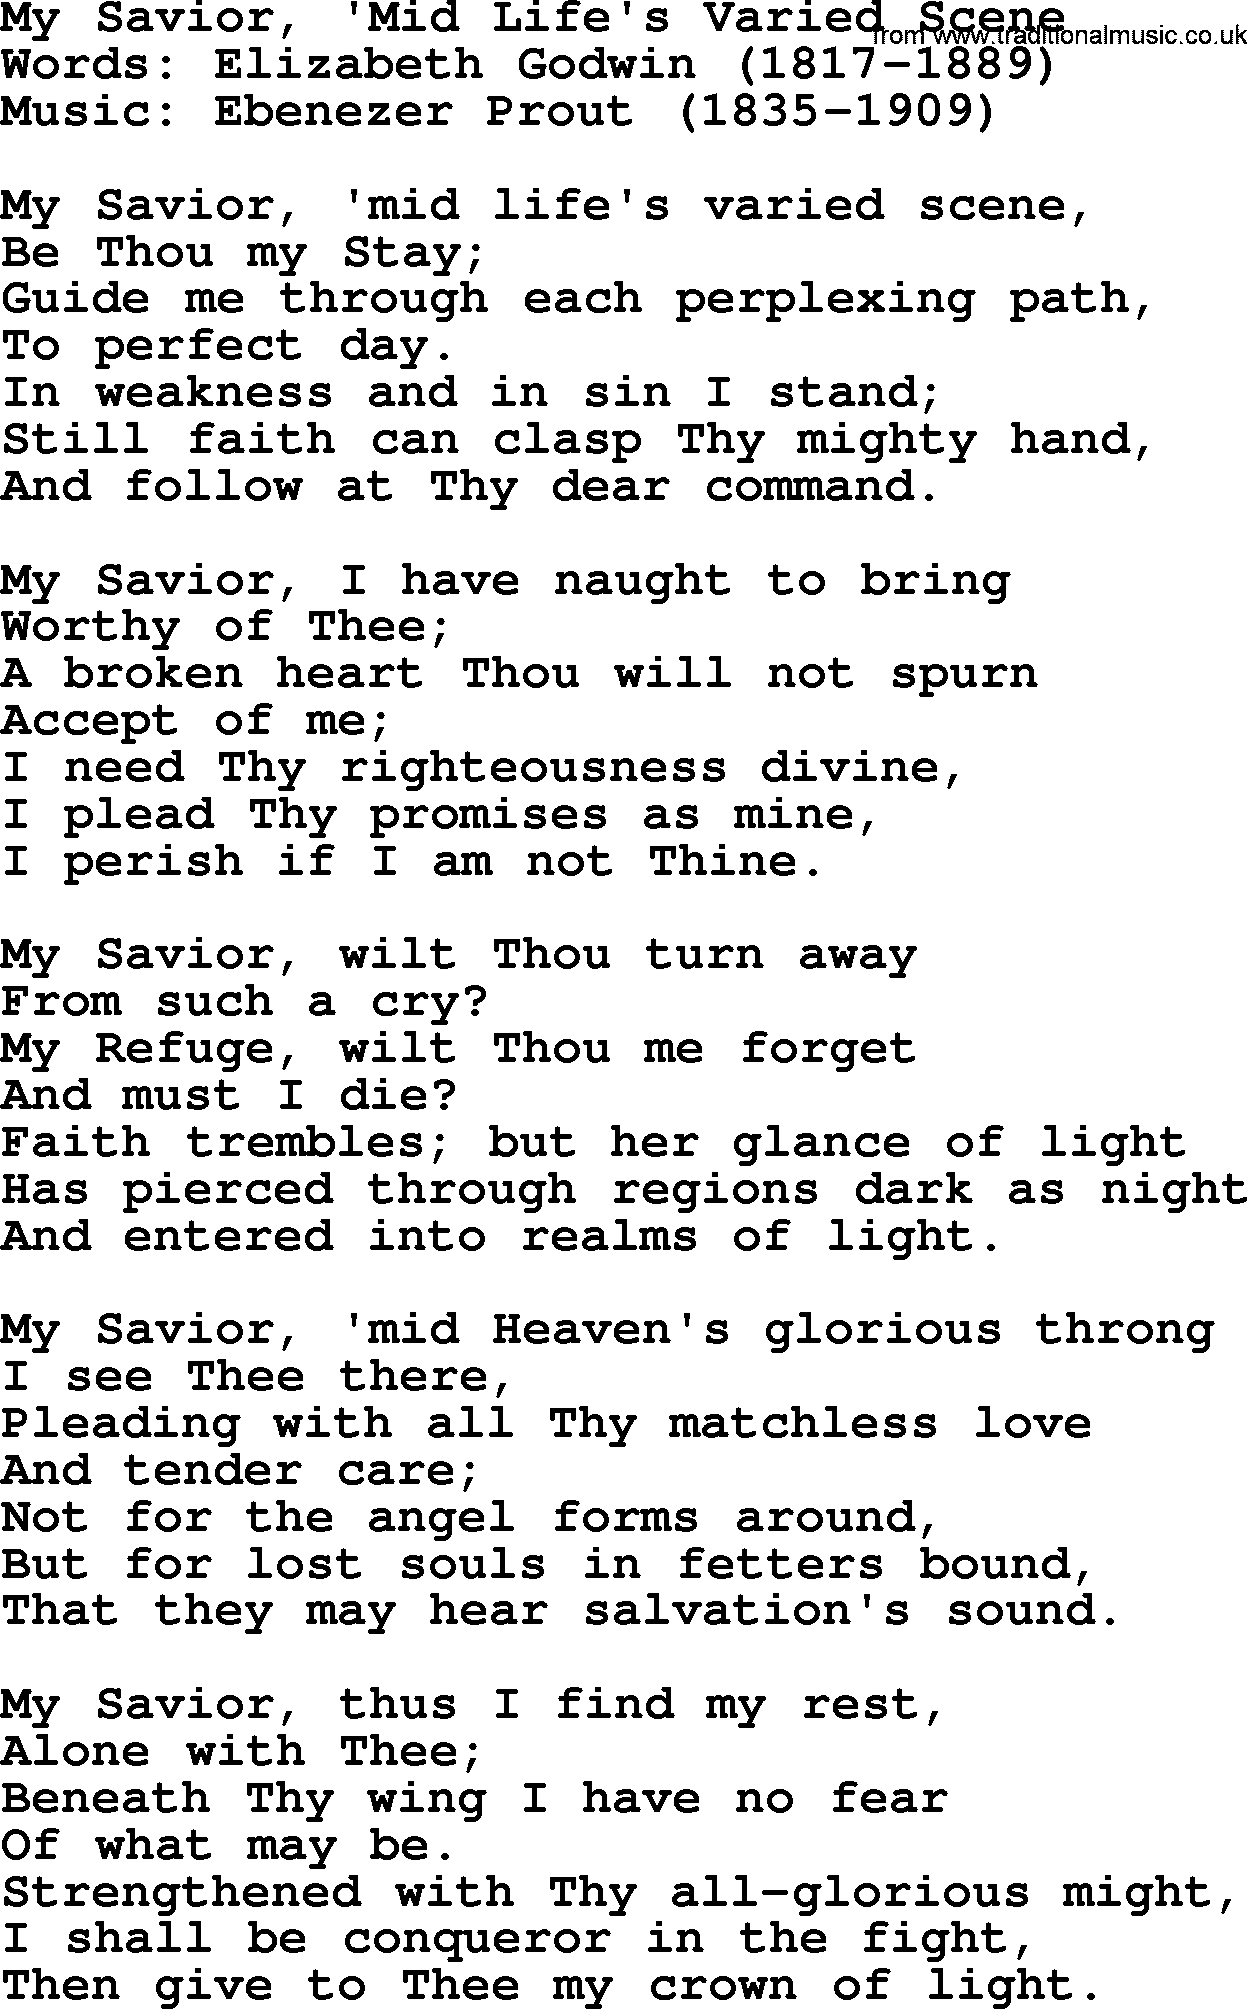 Hymns about Angels, Hymn: My Savior, 'mid Life's Varied Scene.txt lyrics with PDF